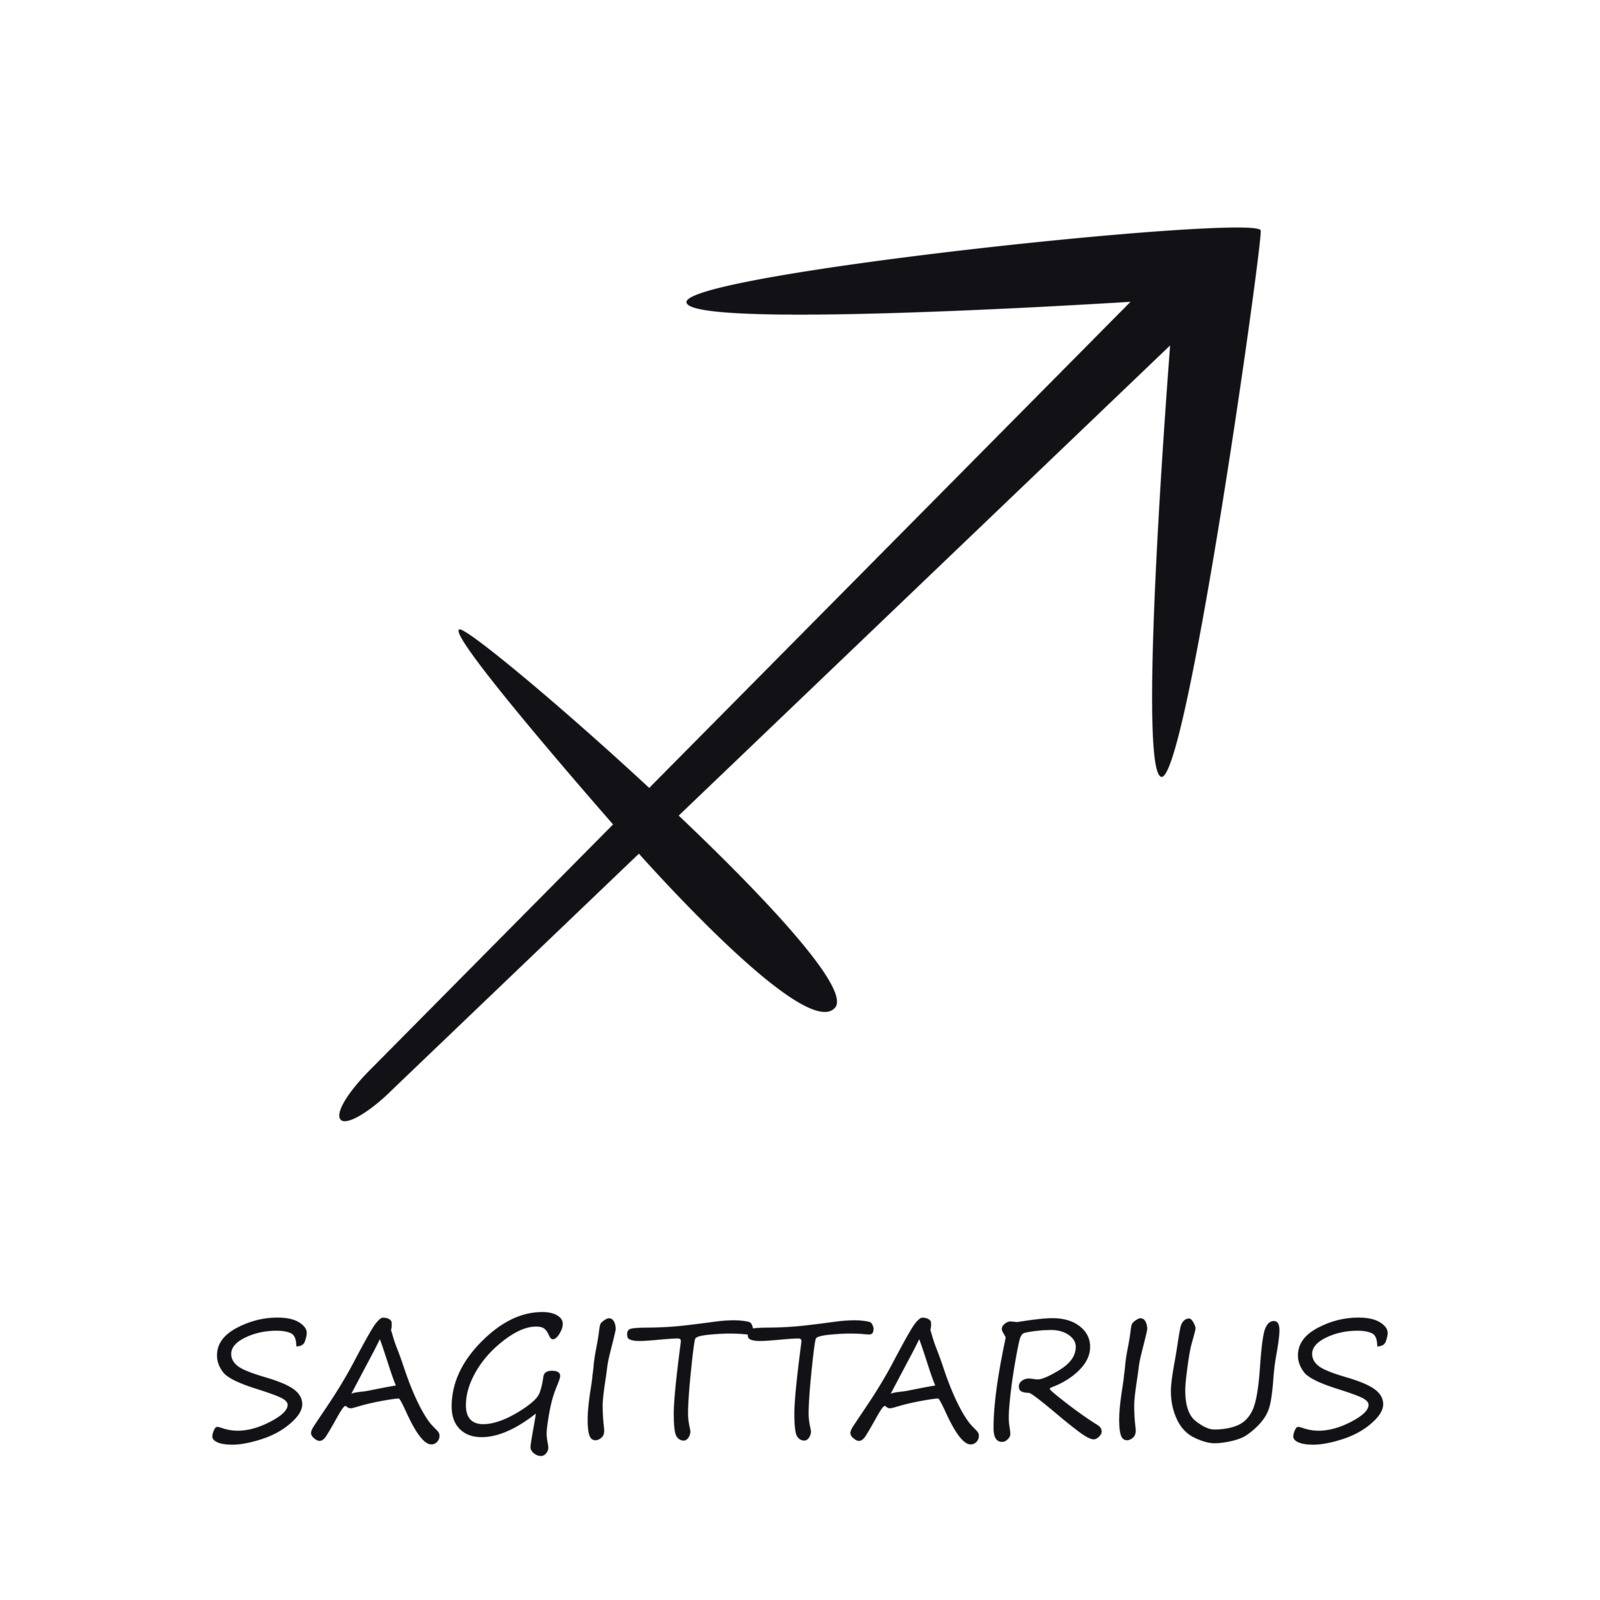 Sagittarius zodiac sign black vector illustration. Celestial archer, mars silhouette symbol. Astrological constellation. Horoscope monthly prediction calendar element. Isolated glyph icon